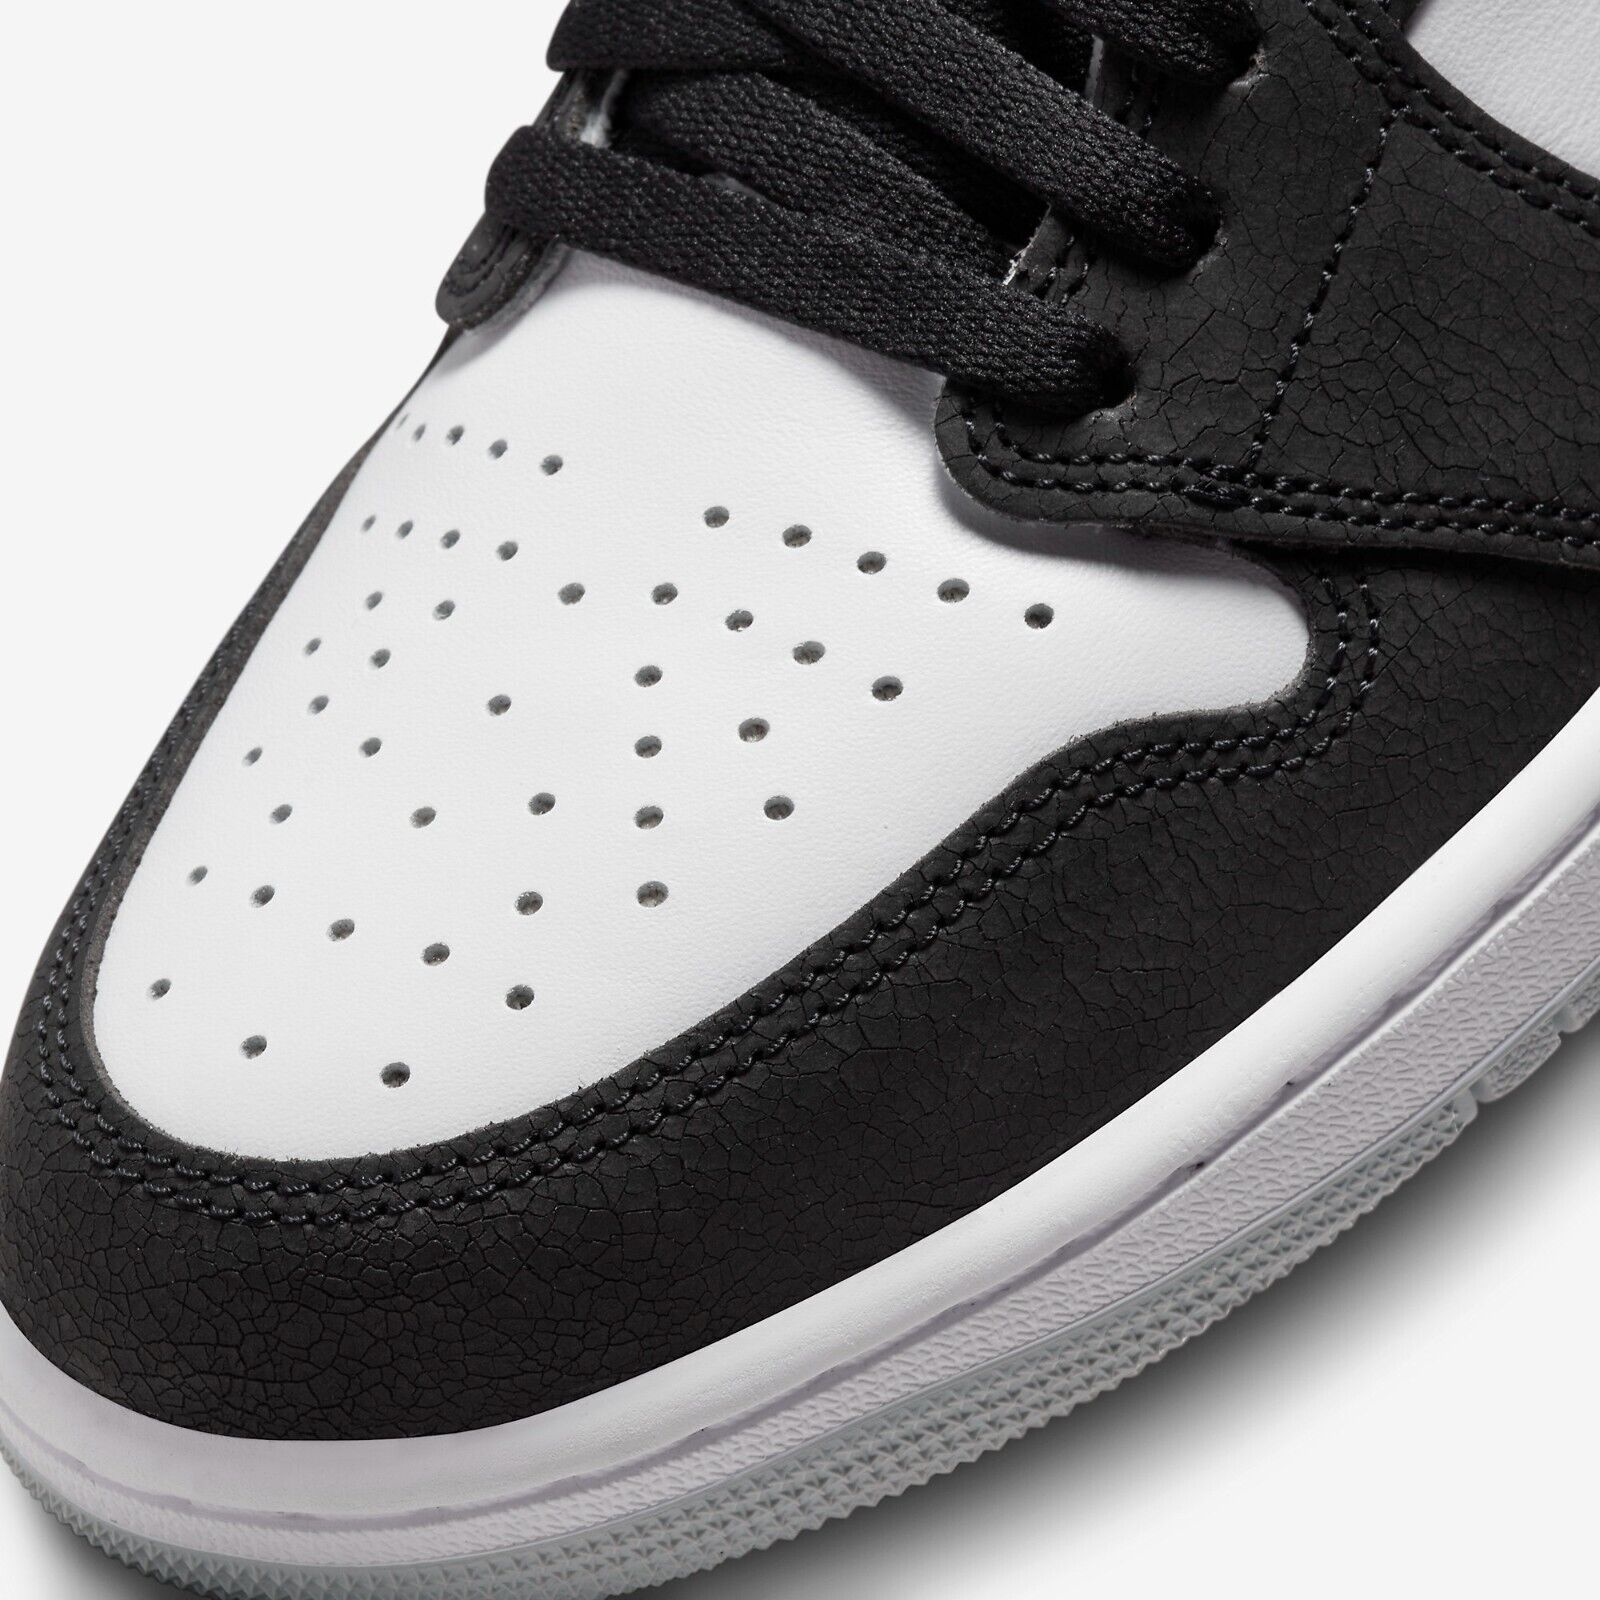 New Nike Jordan 1 Retro High OG Bleached Coral Shoes - White/ Black ...